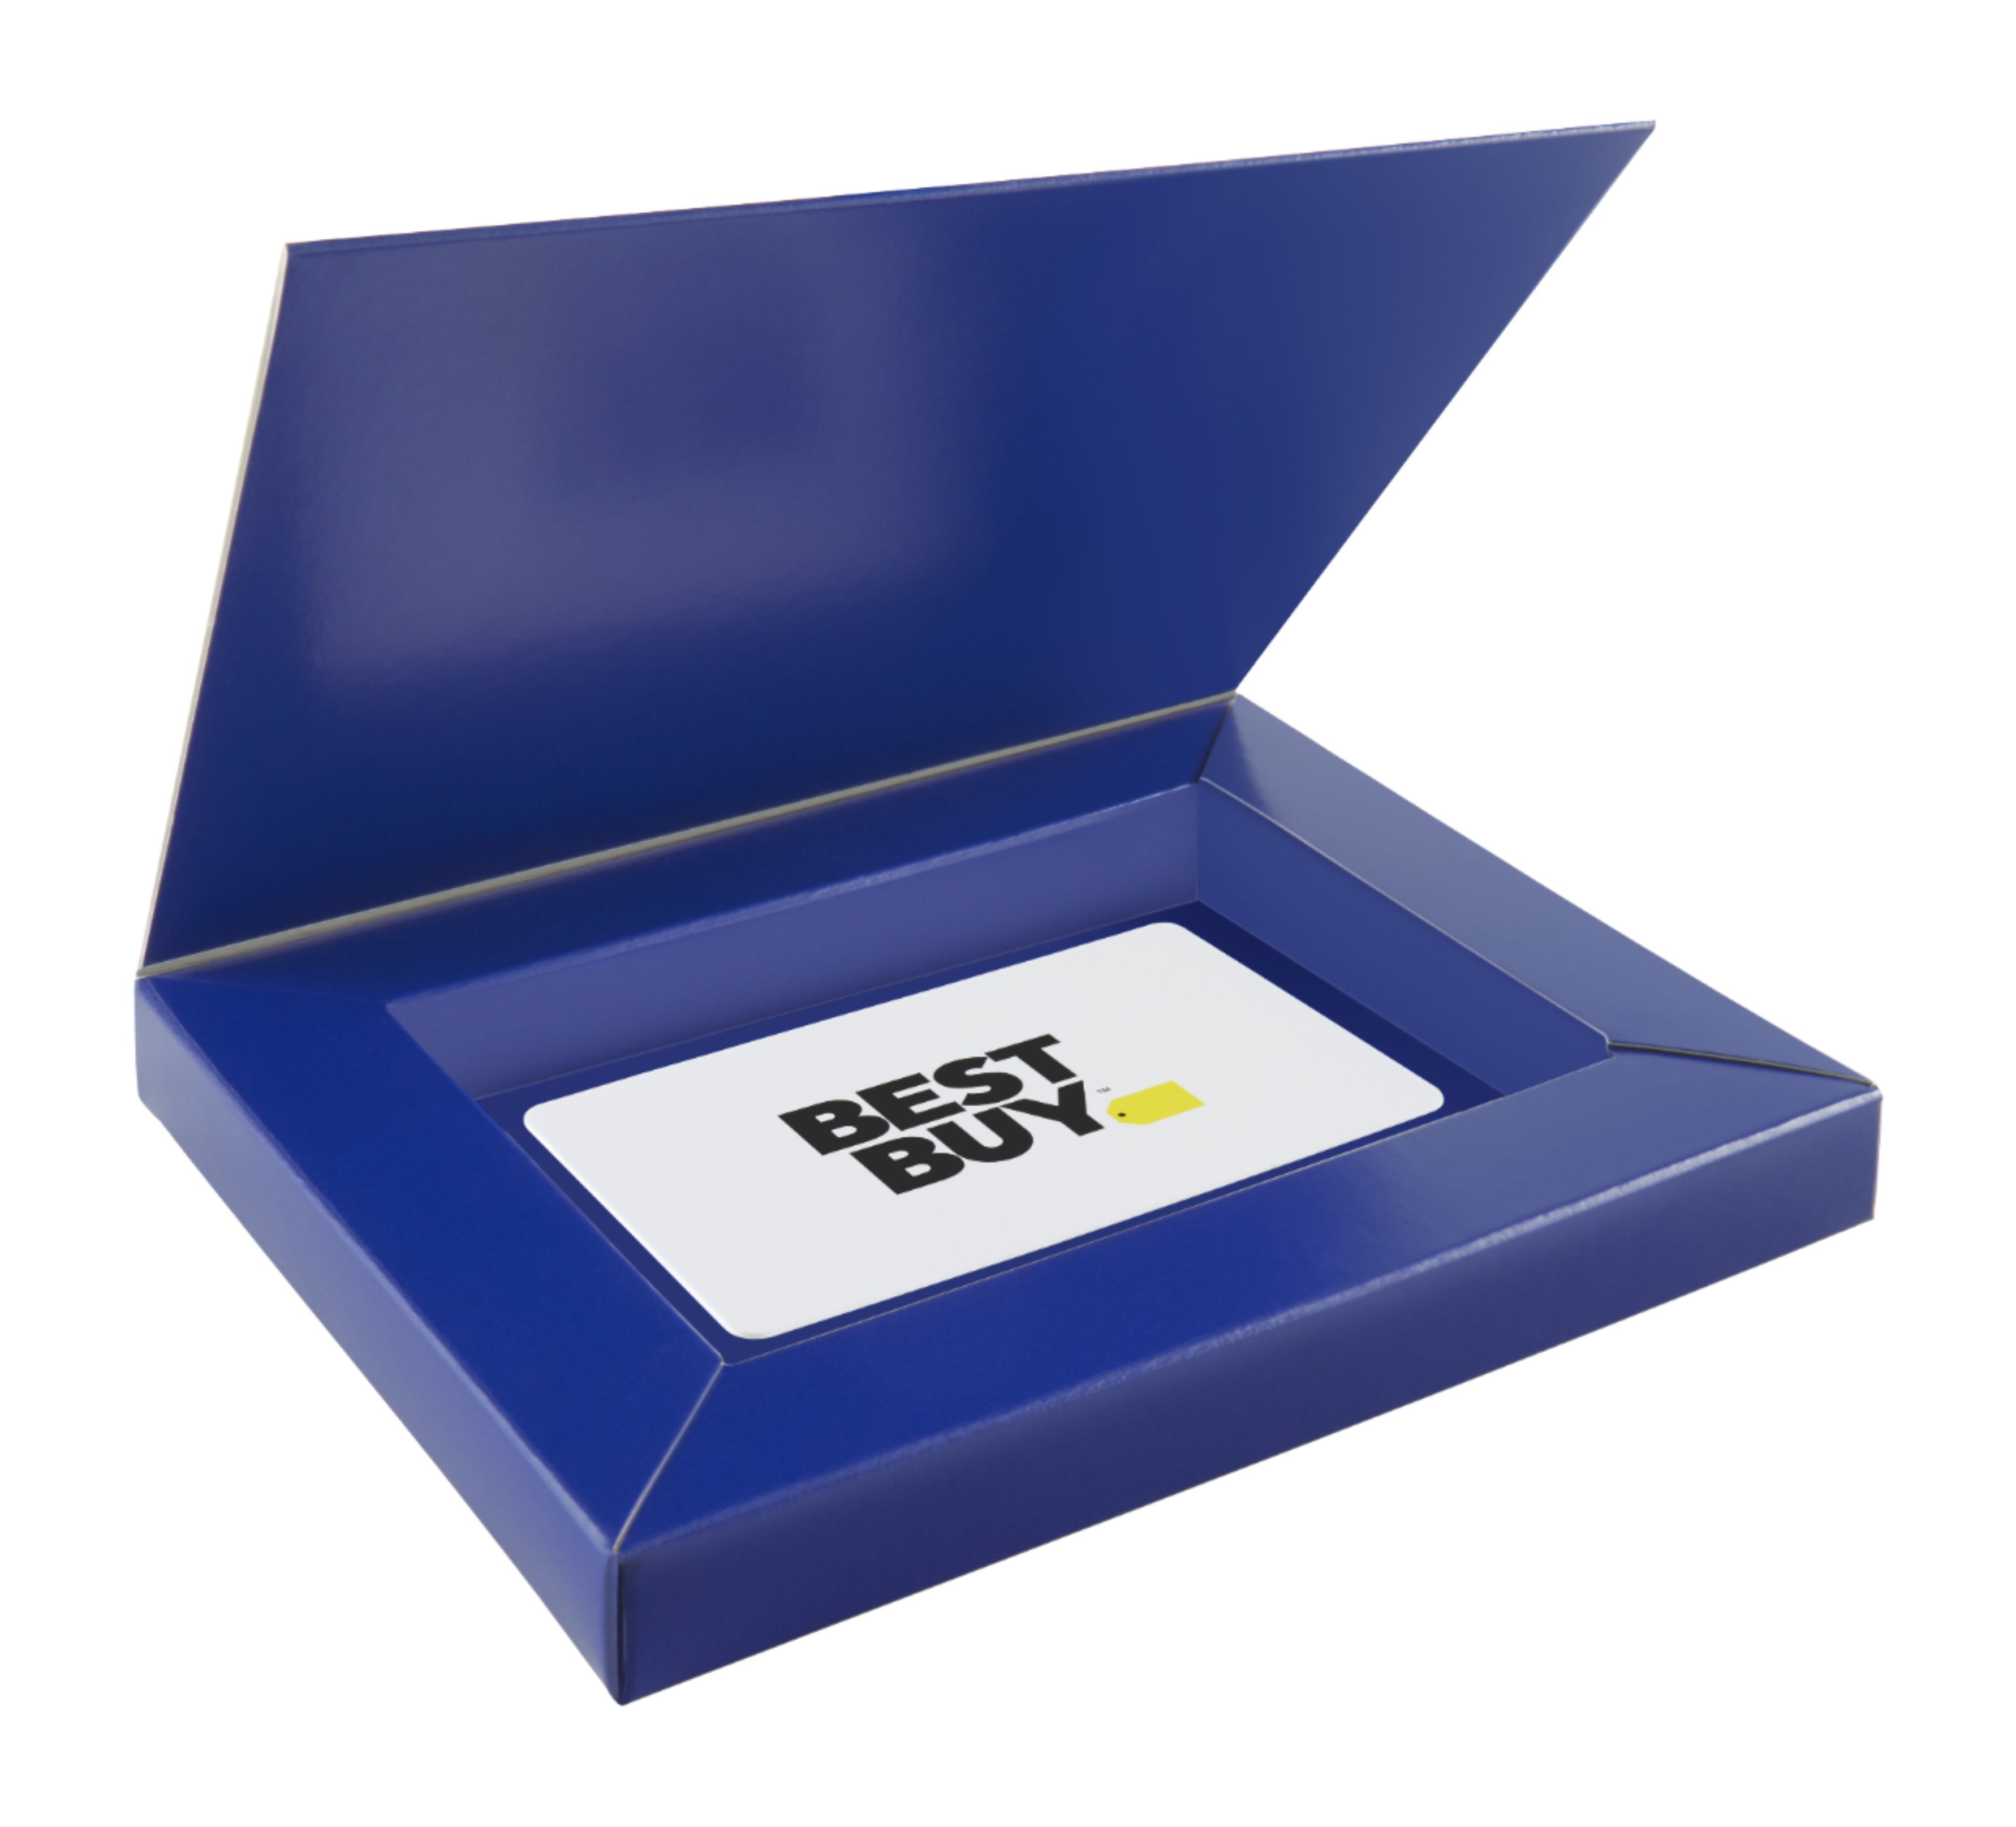 Best Buy® $15 Best Buy Gift Card with Gift Box 6300272 - Best Buy